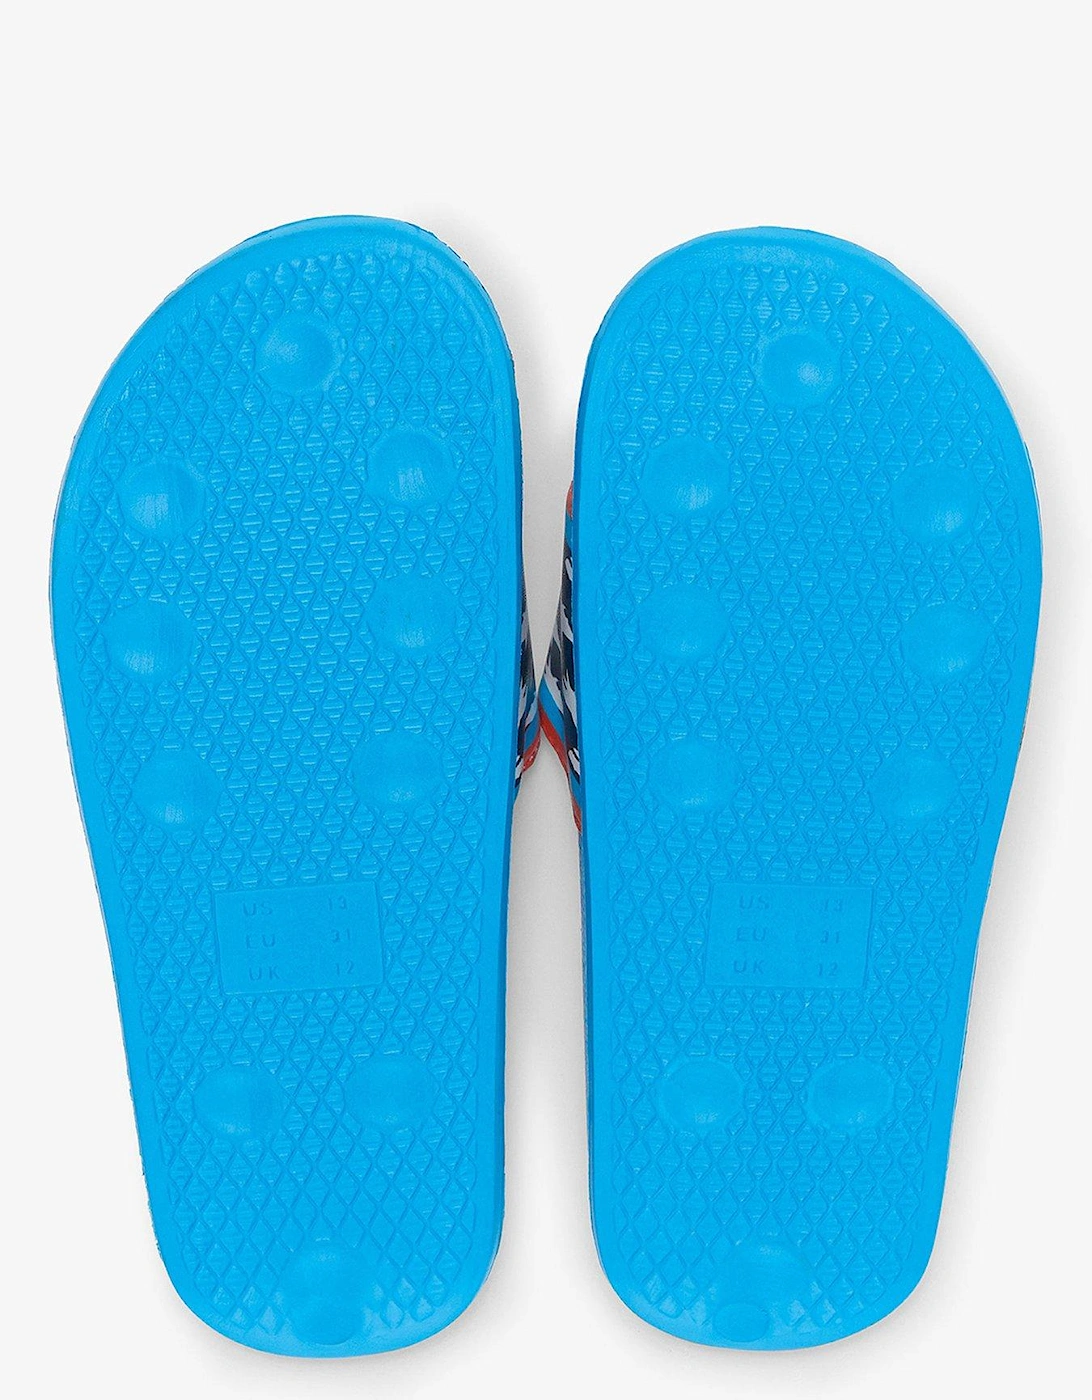 Boys Printed Shark Slide On Sandals - Blue